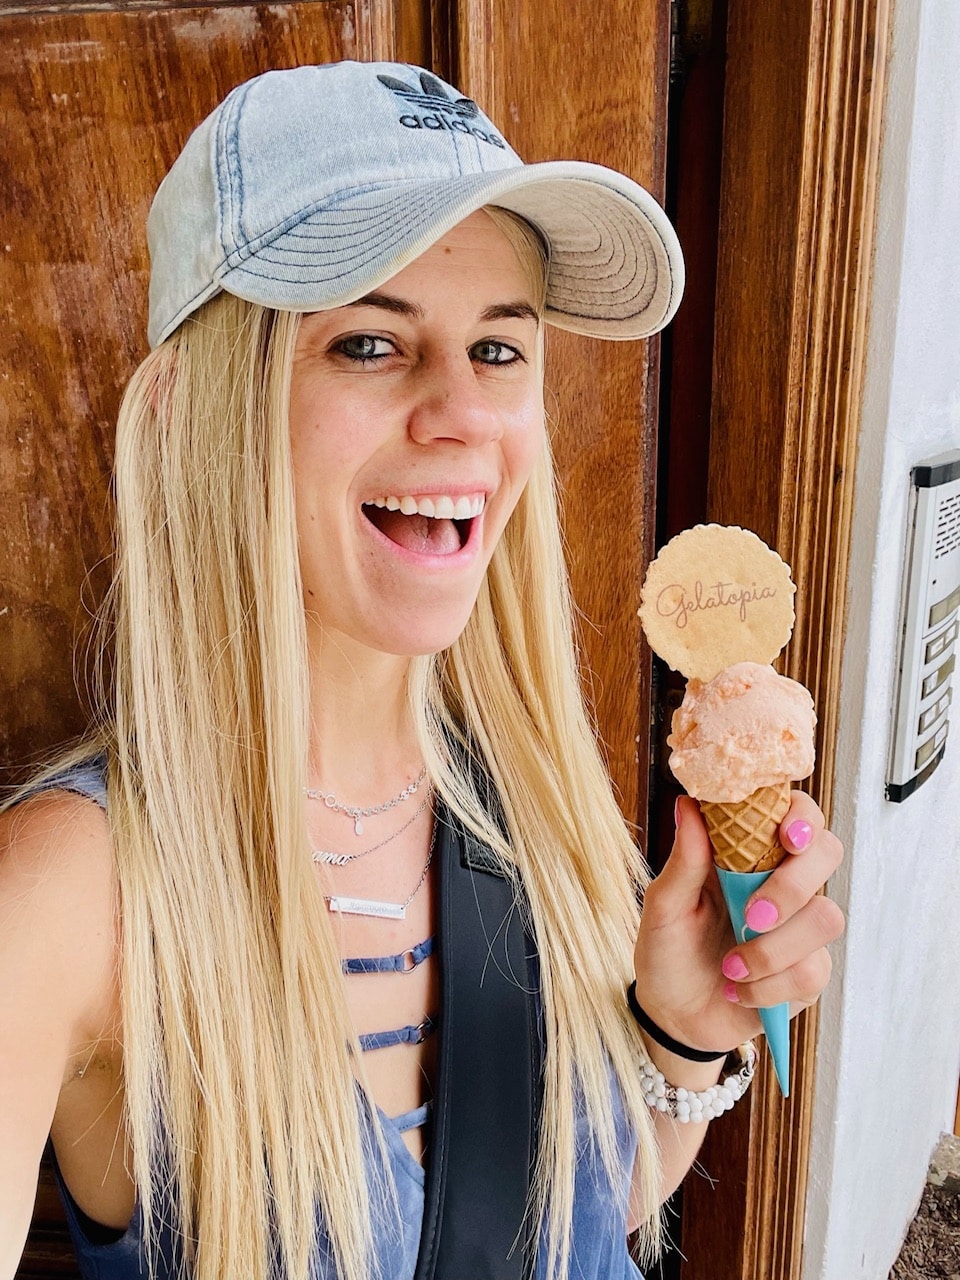 Rachel with an ice cream cone.